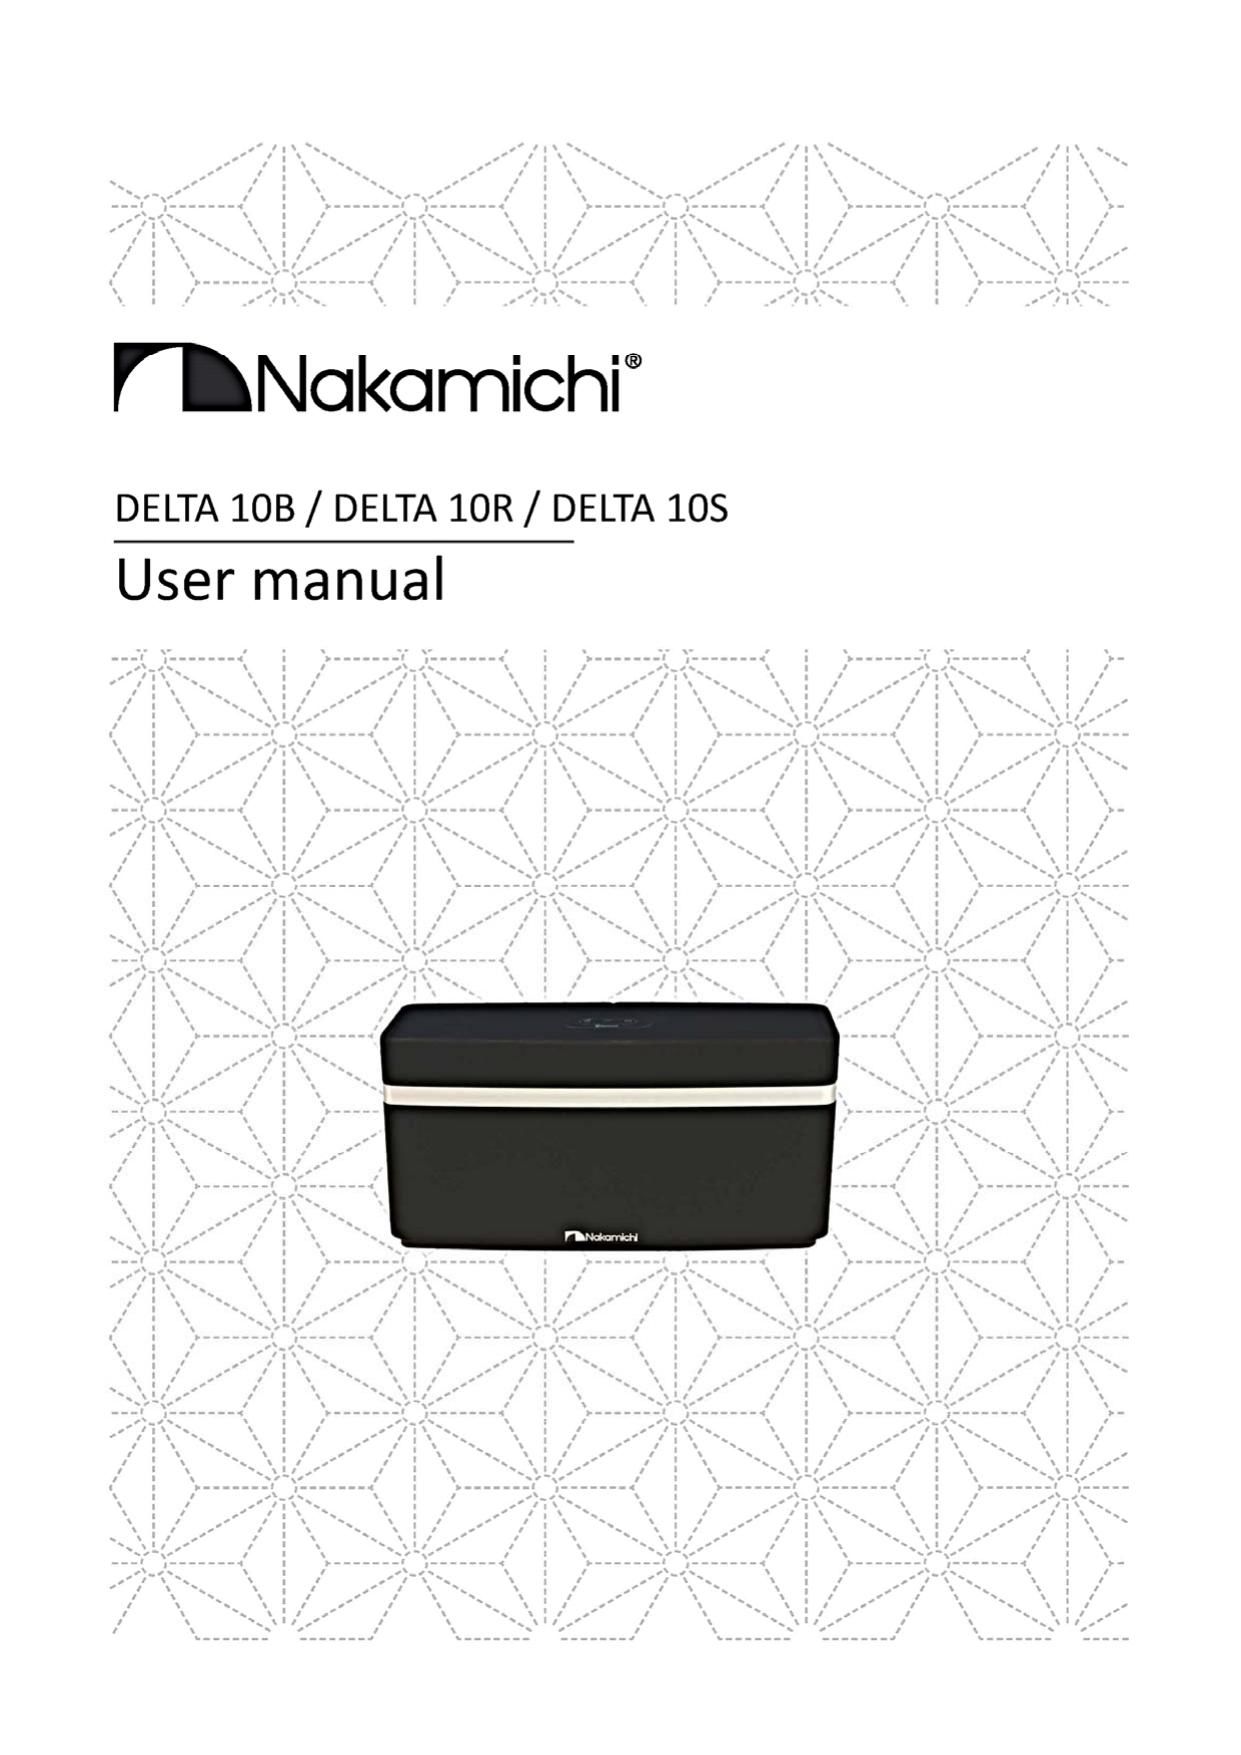 Nakamichi DELTA 10 R Owners Manual